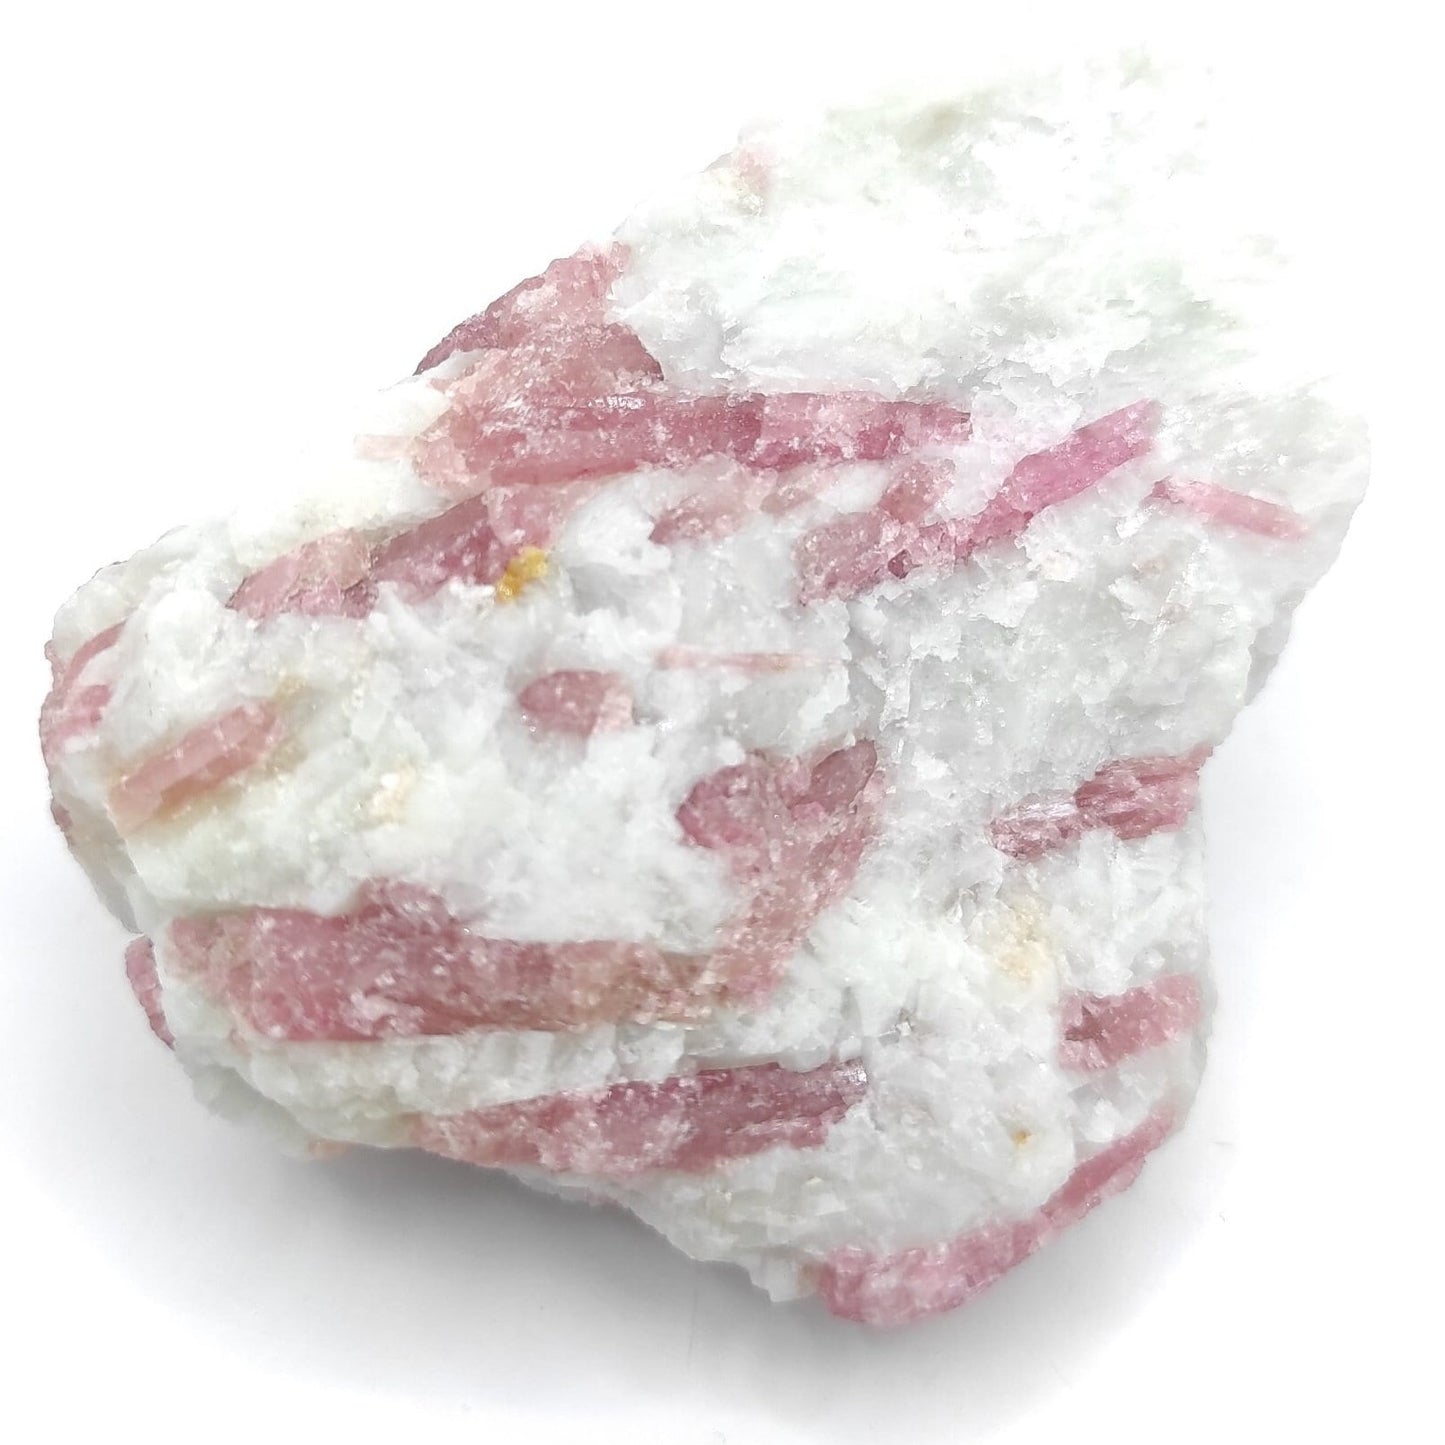 115g Pink Tourmaline in Quartz - Minas Gerais, Brazil - Rough Pink Tourmaline Crystal - Natural Crystals - Crystal Specimen from Brazil